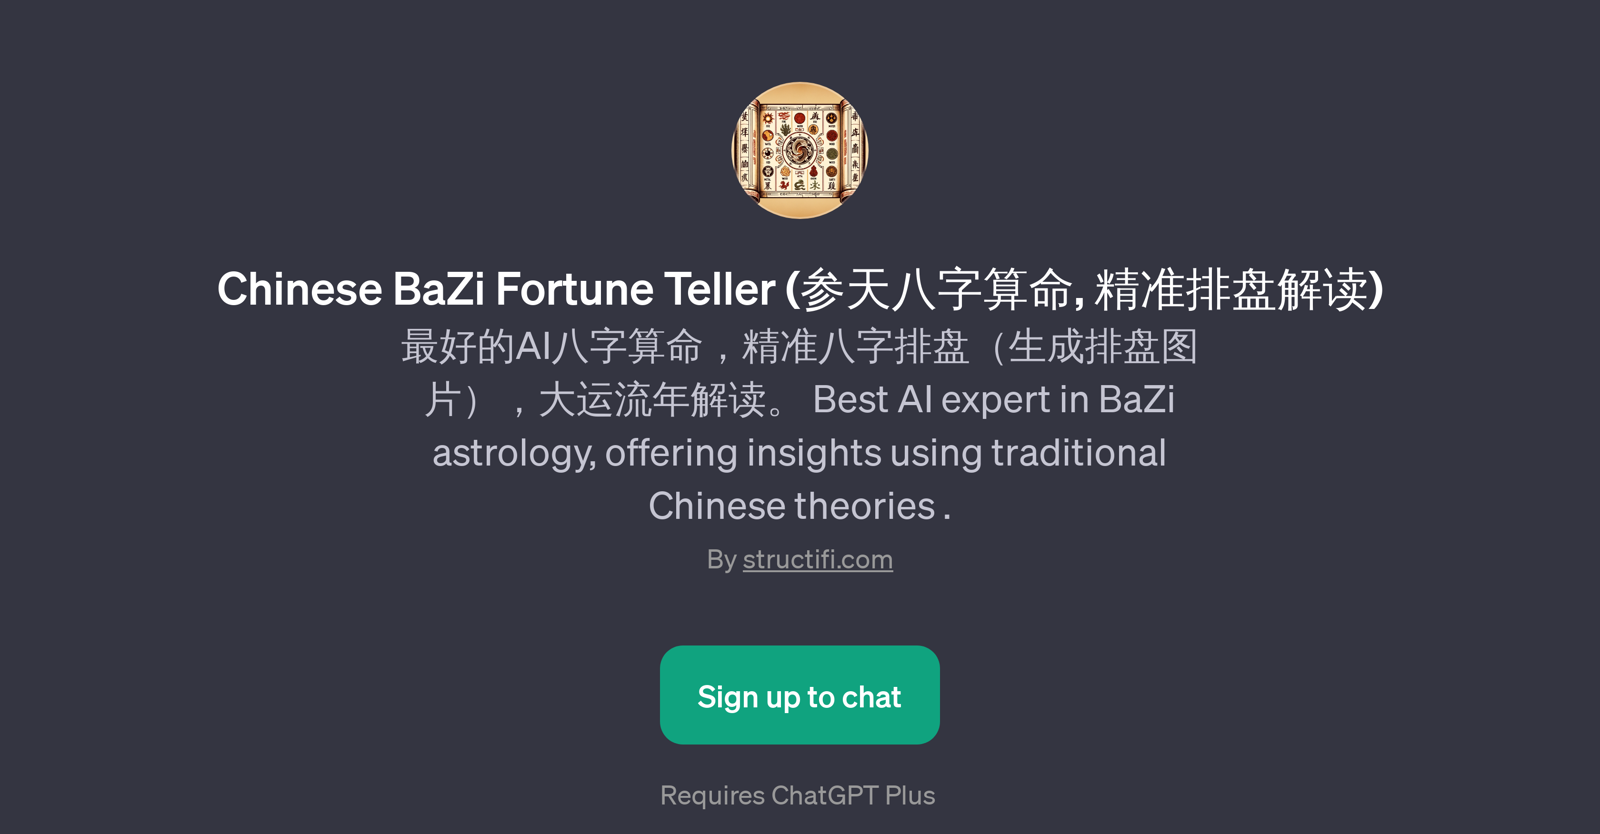 Chinese BaZi Fortune Teller website